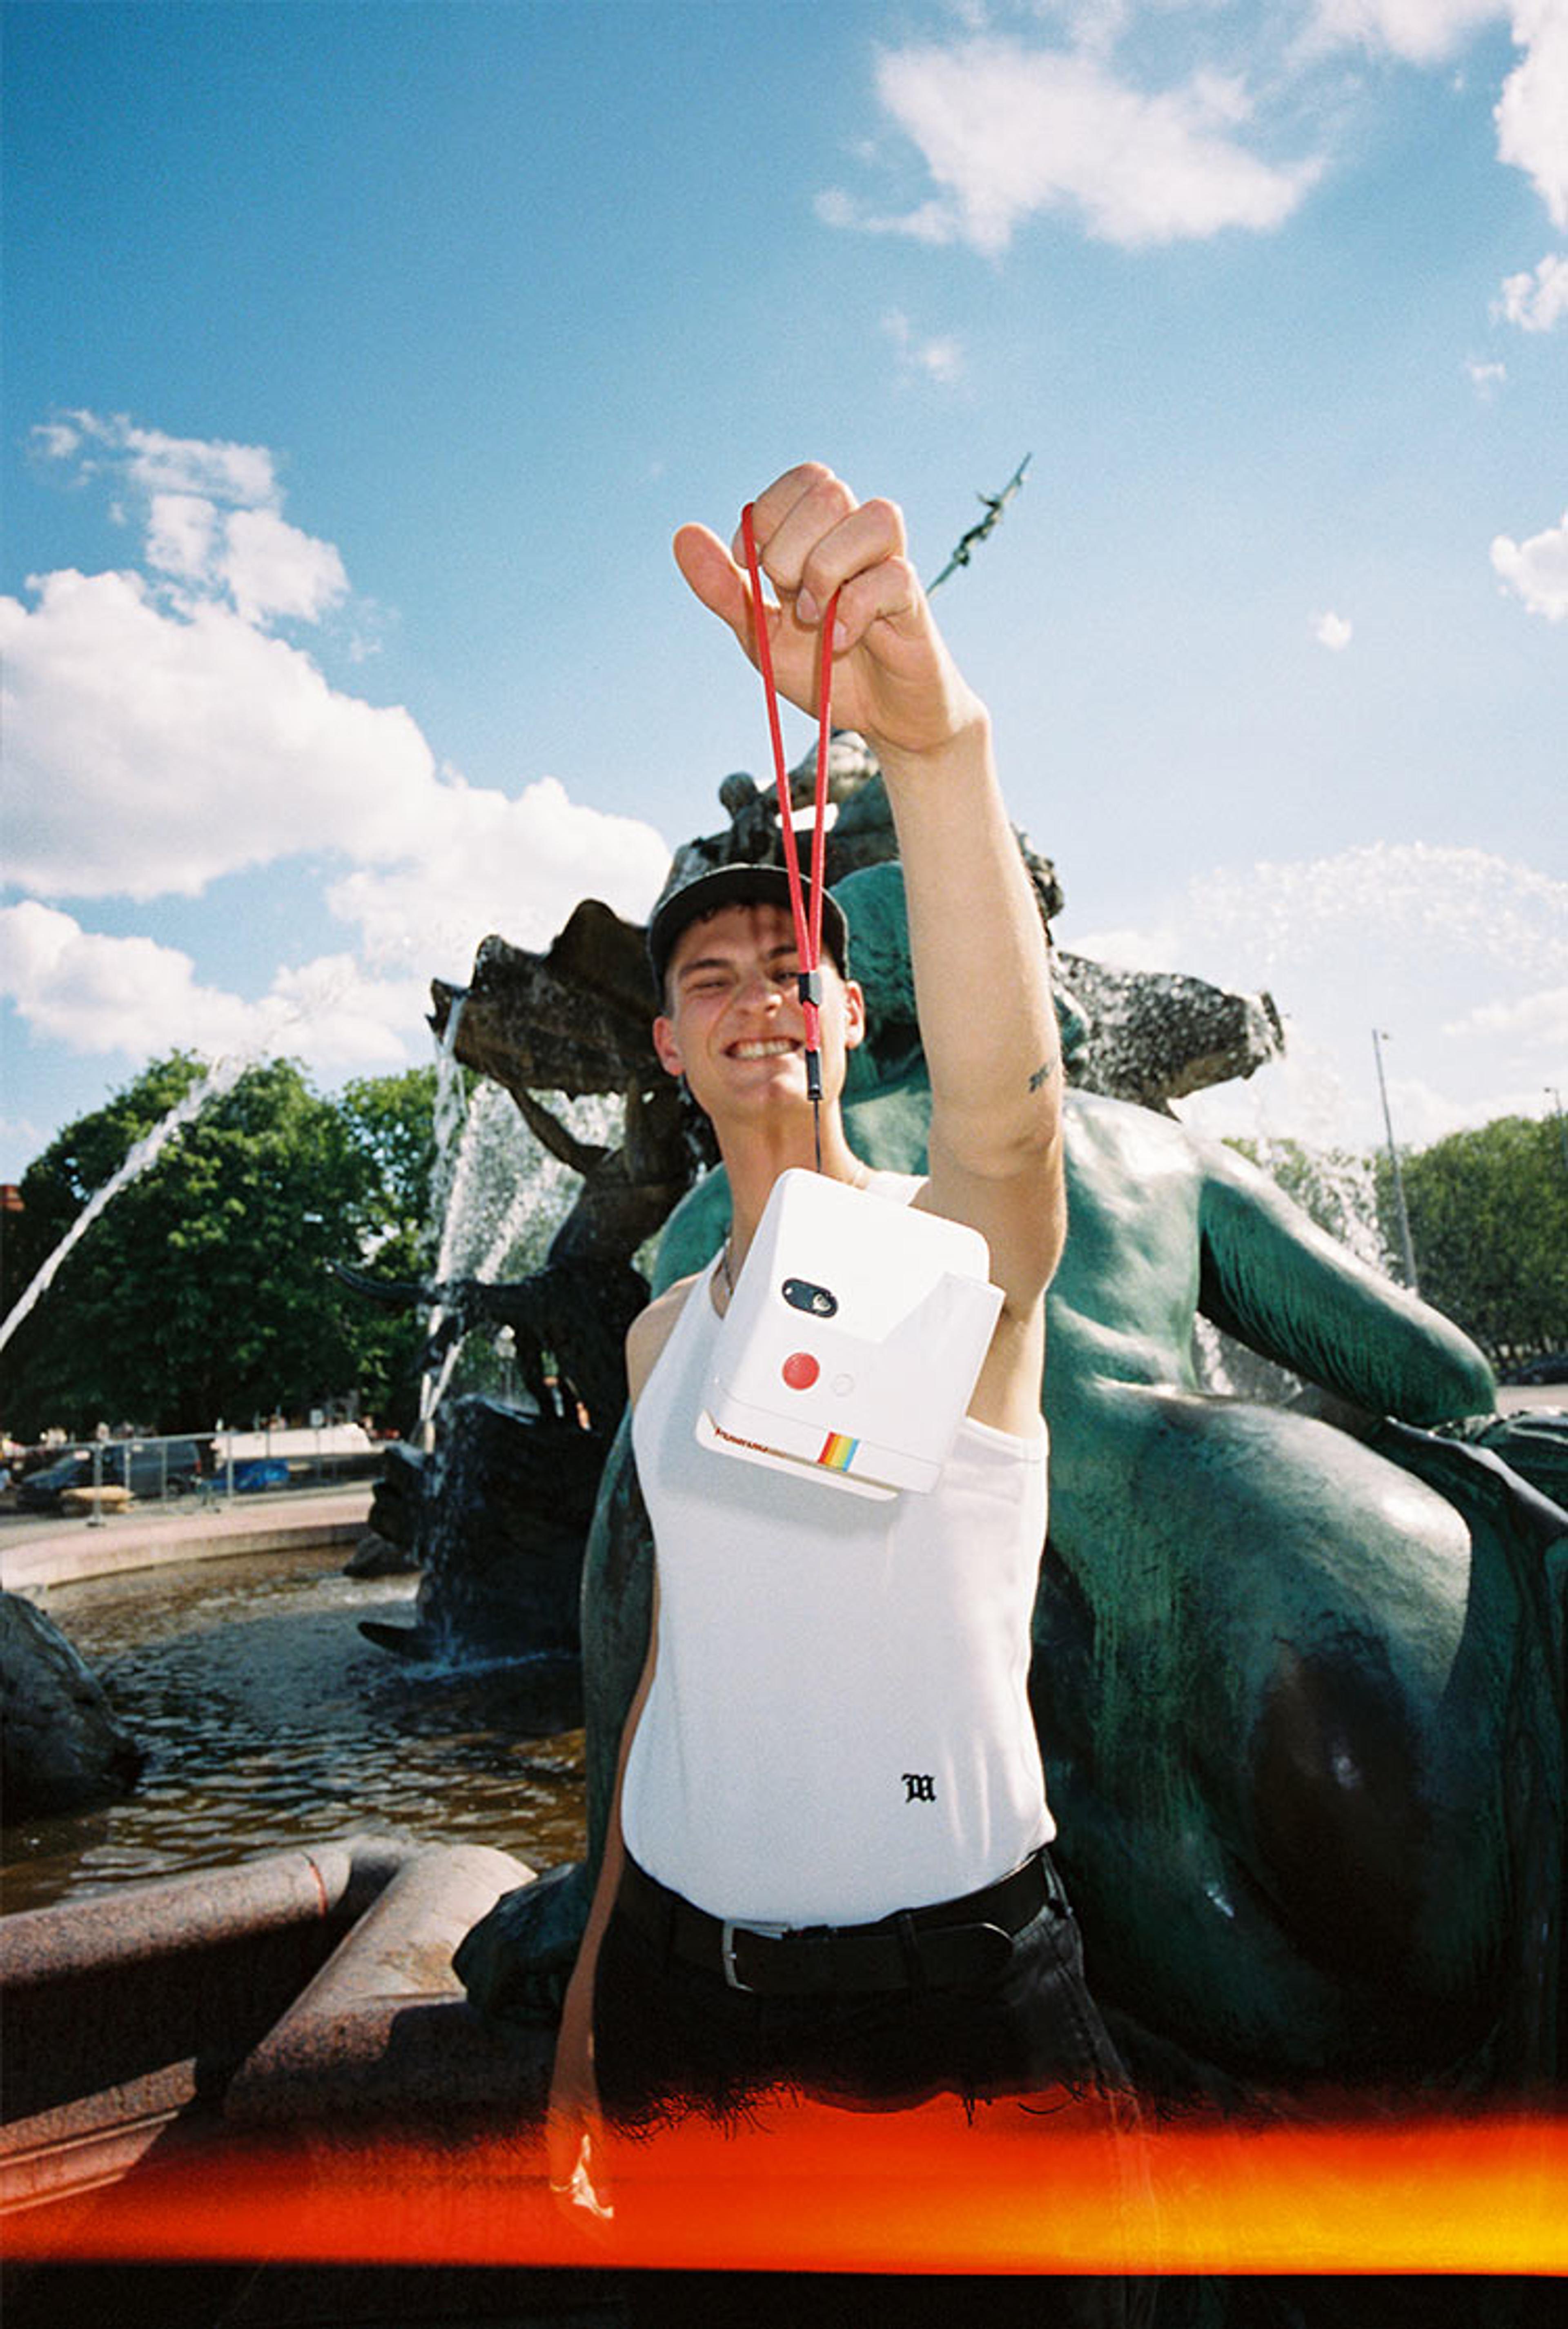 Steffen Grap with Polaroid Go camera